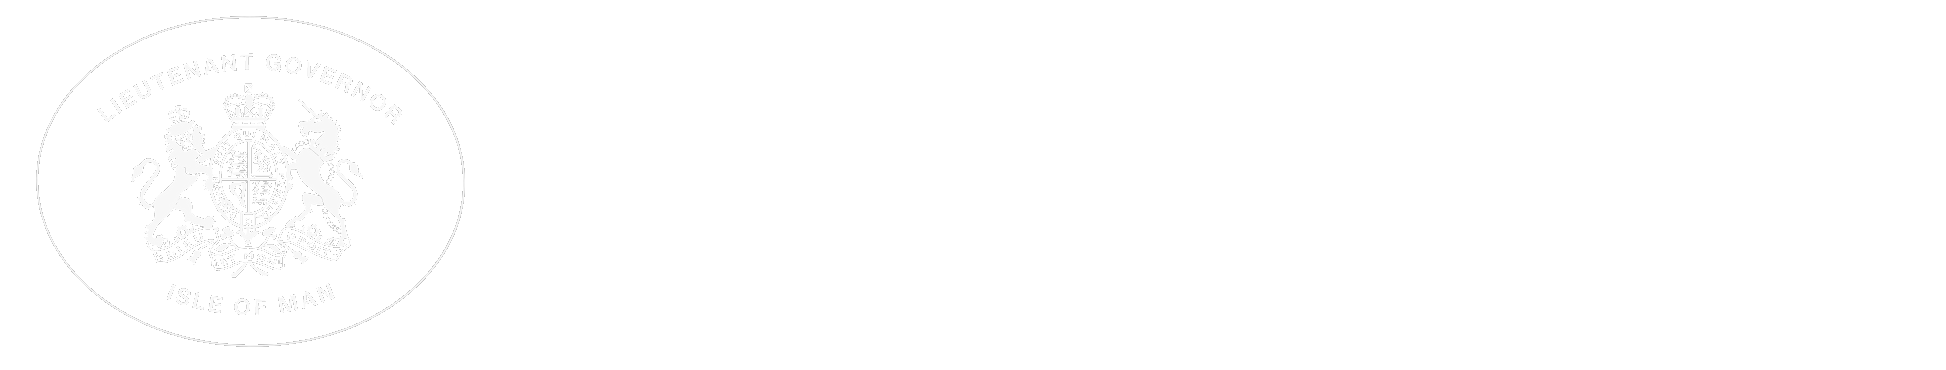 Government House logo